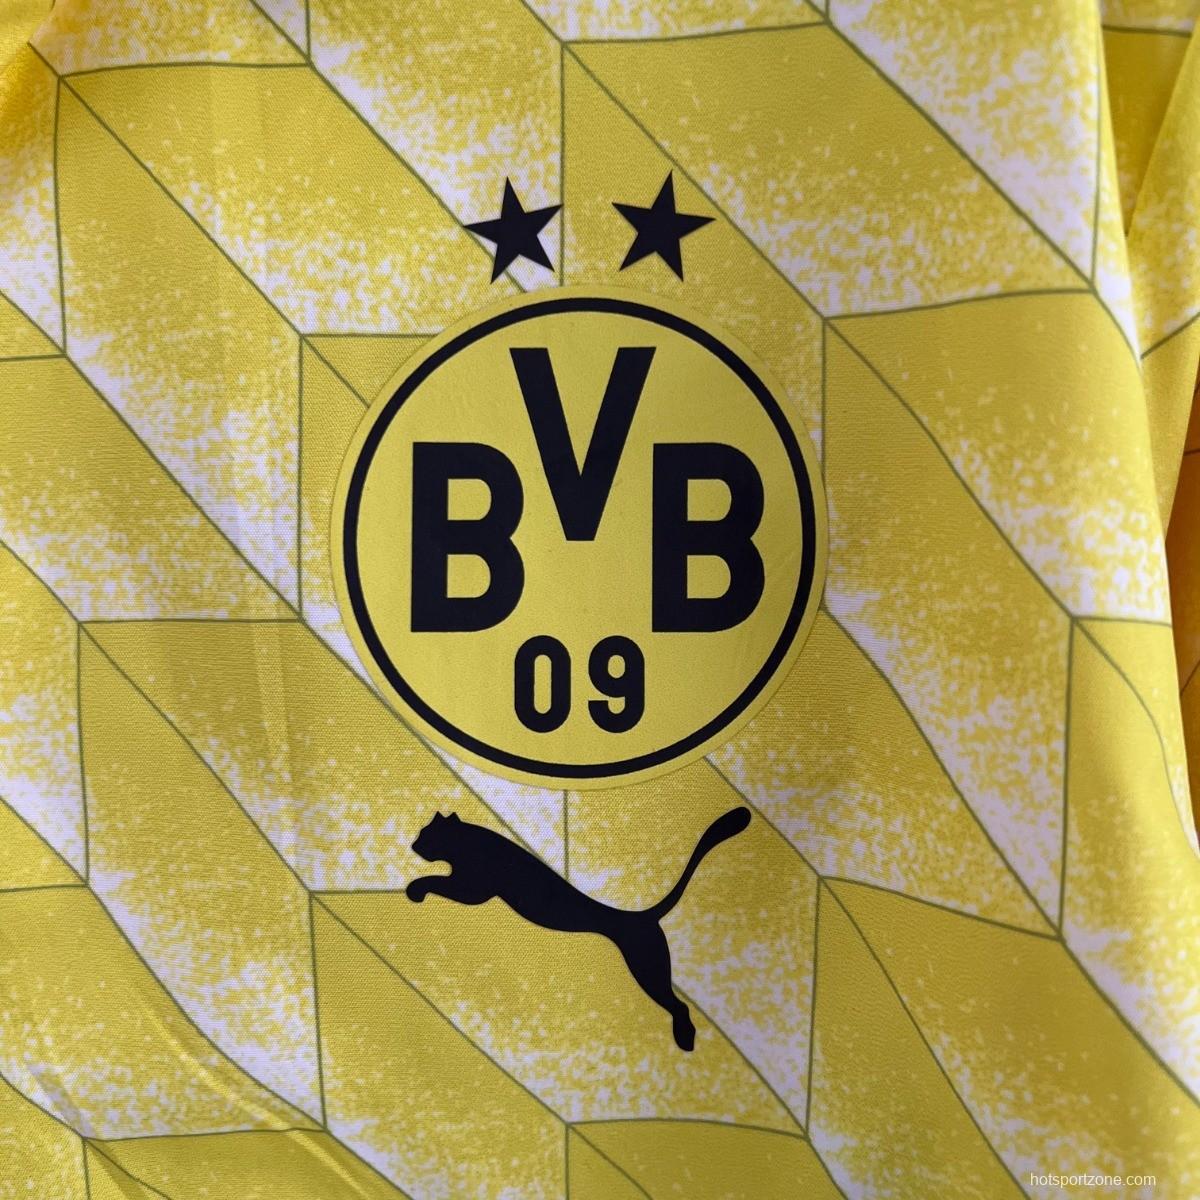 23/24 Borussia Dortmund Yellow Reversible Jersey